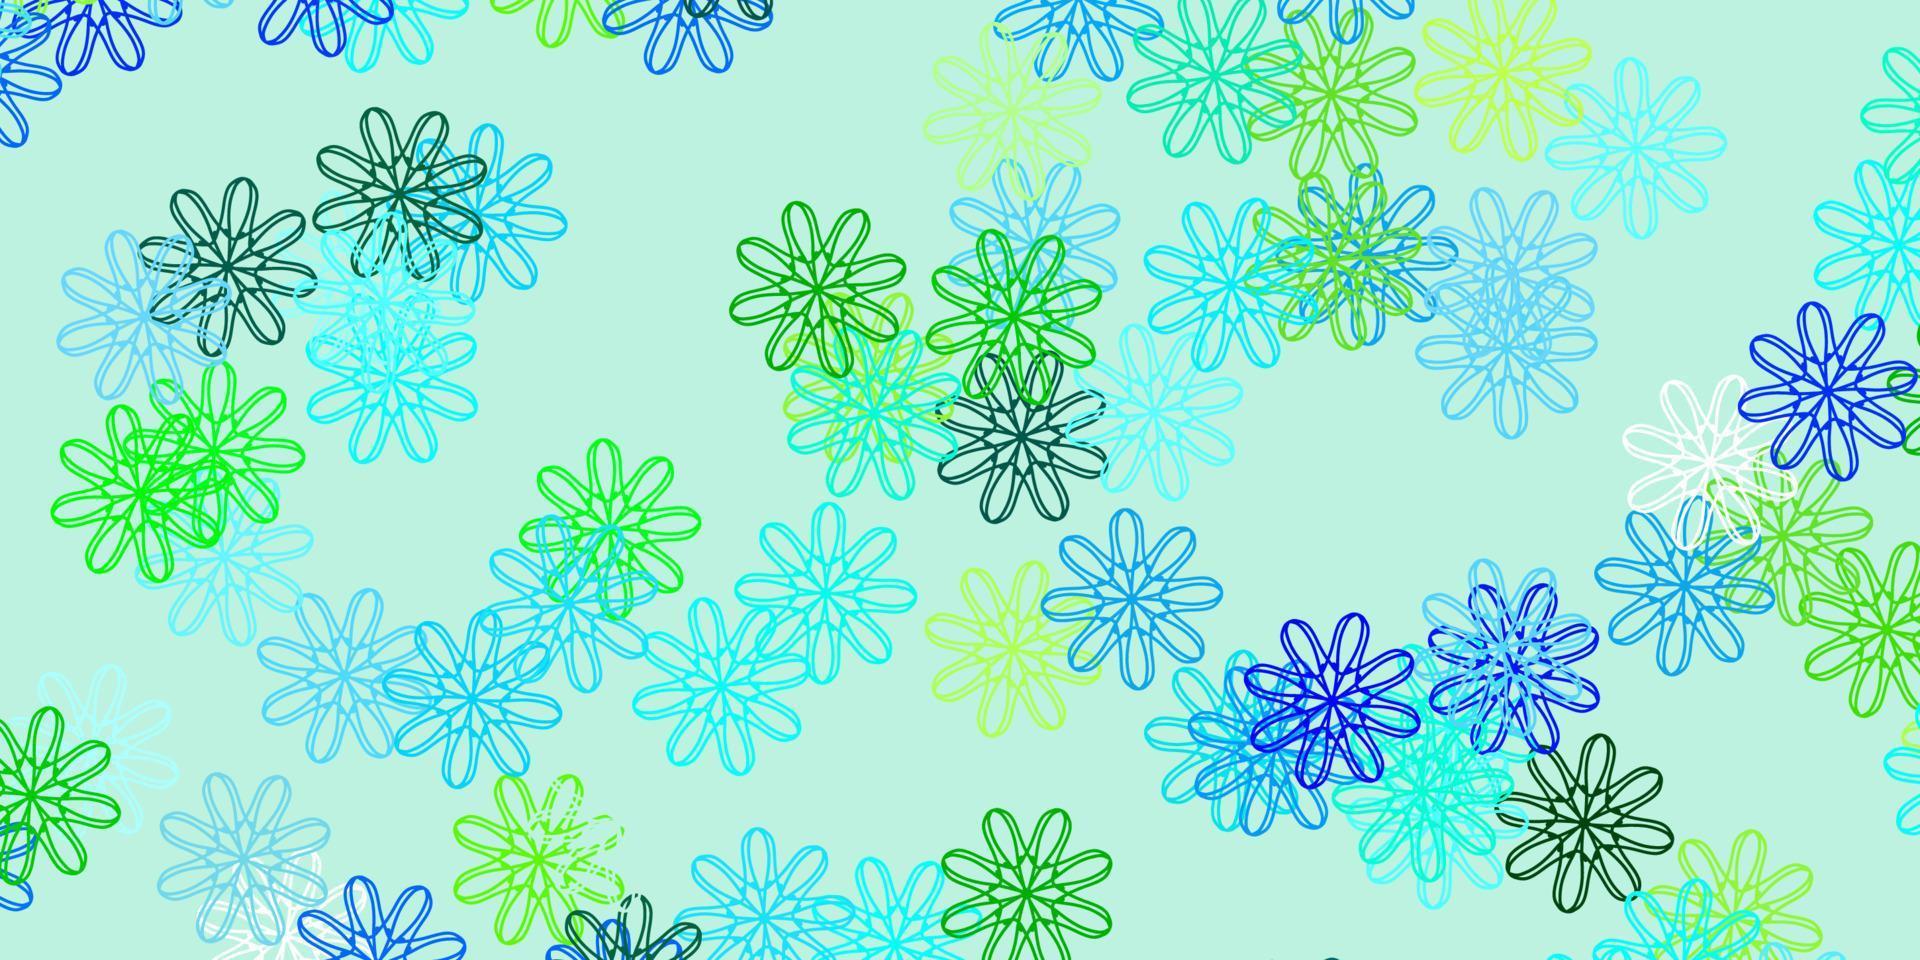 hellblaues, grünes Vektor-Gekritzelmuster mit Blumen. vektor